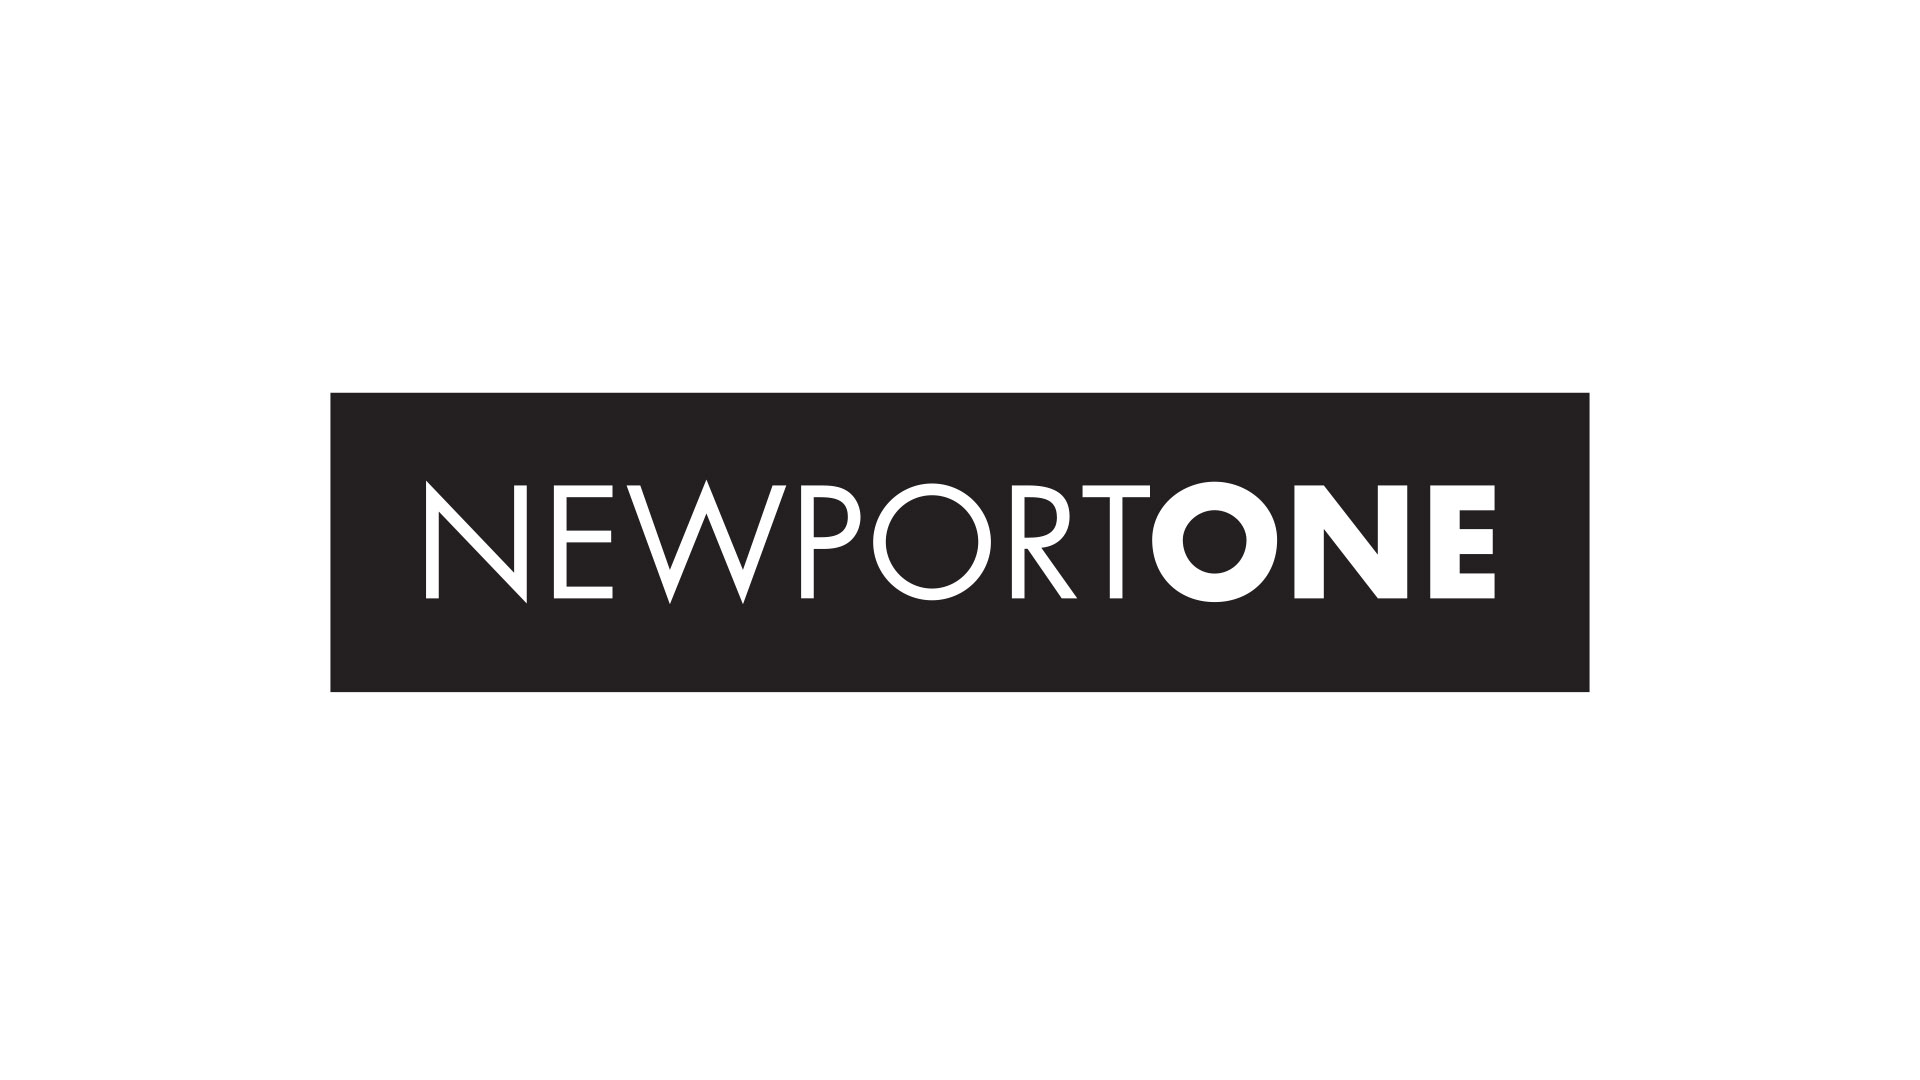 newport one logo on white